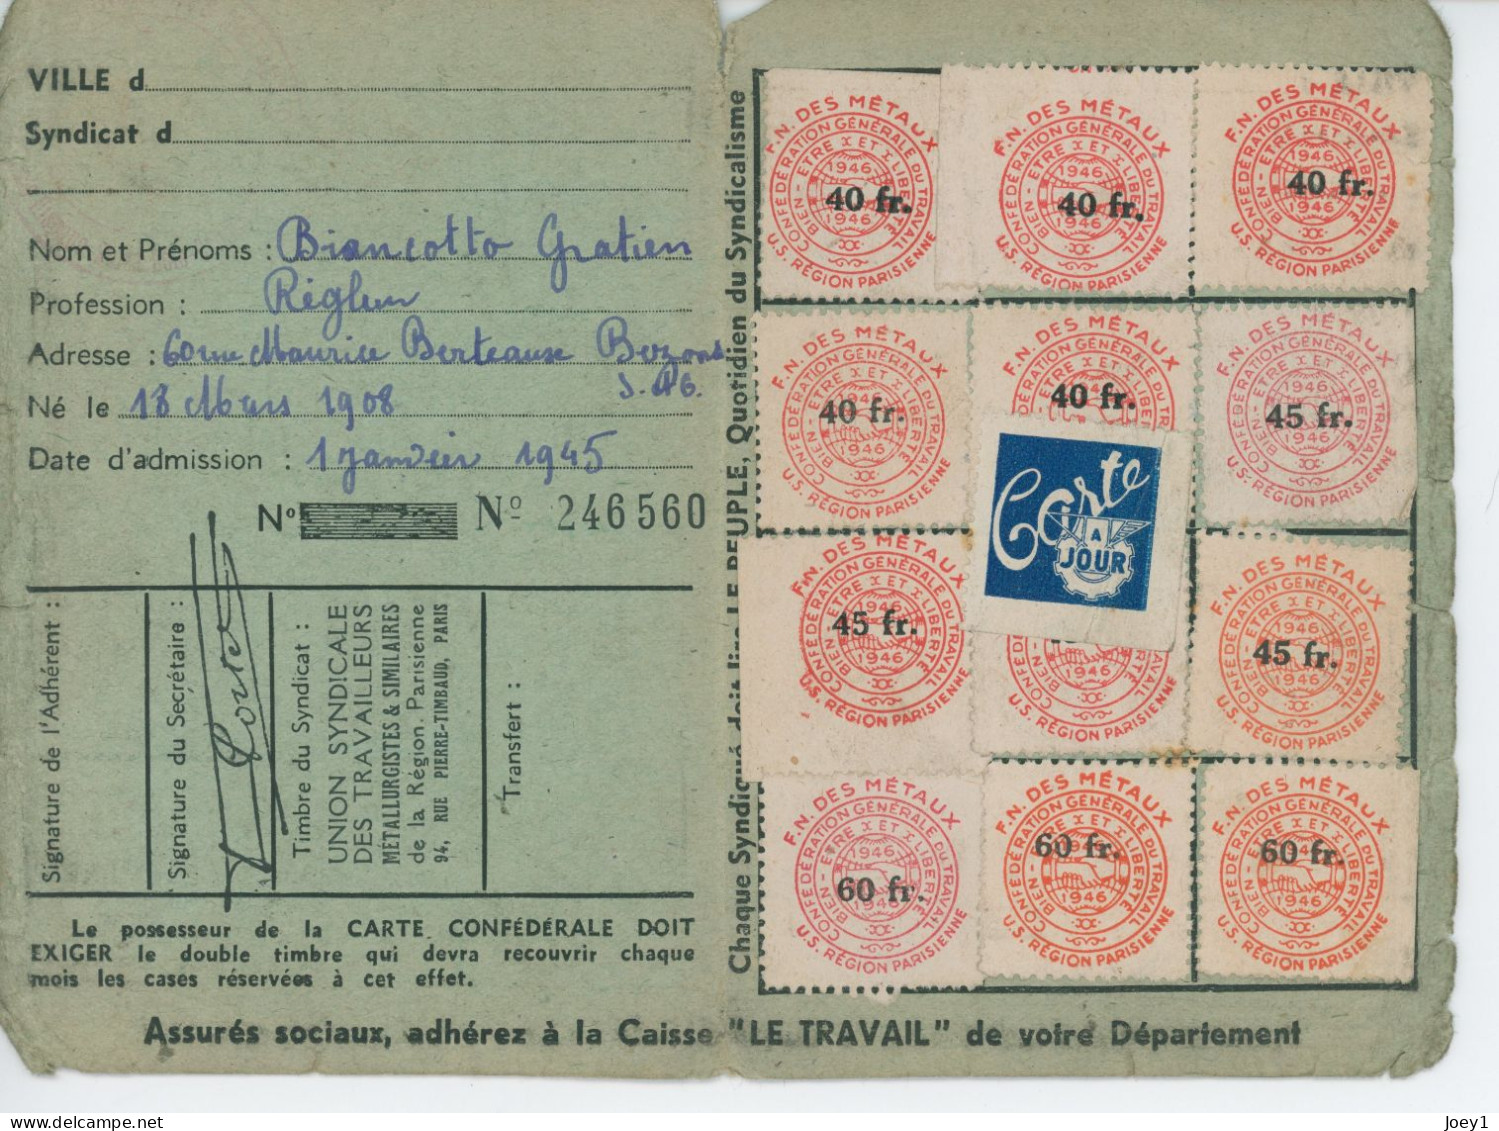 Carte De La CGT 1946 - Cartes De Membre